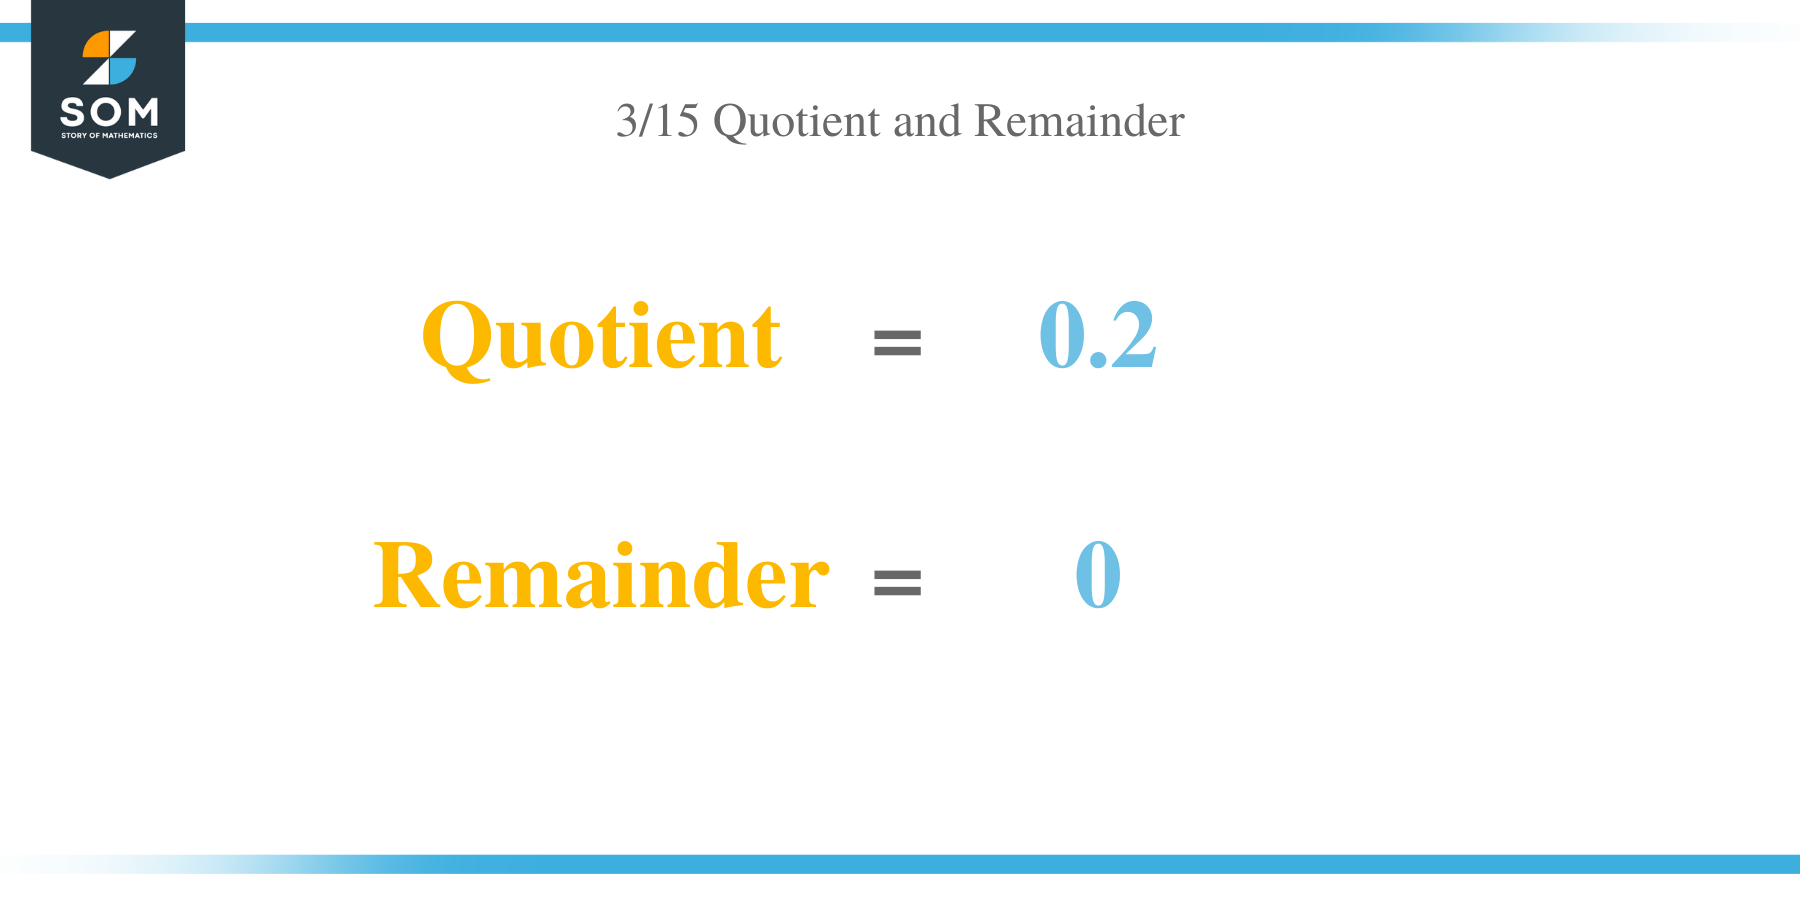 Quotient and Remainder of 3 per 15